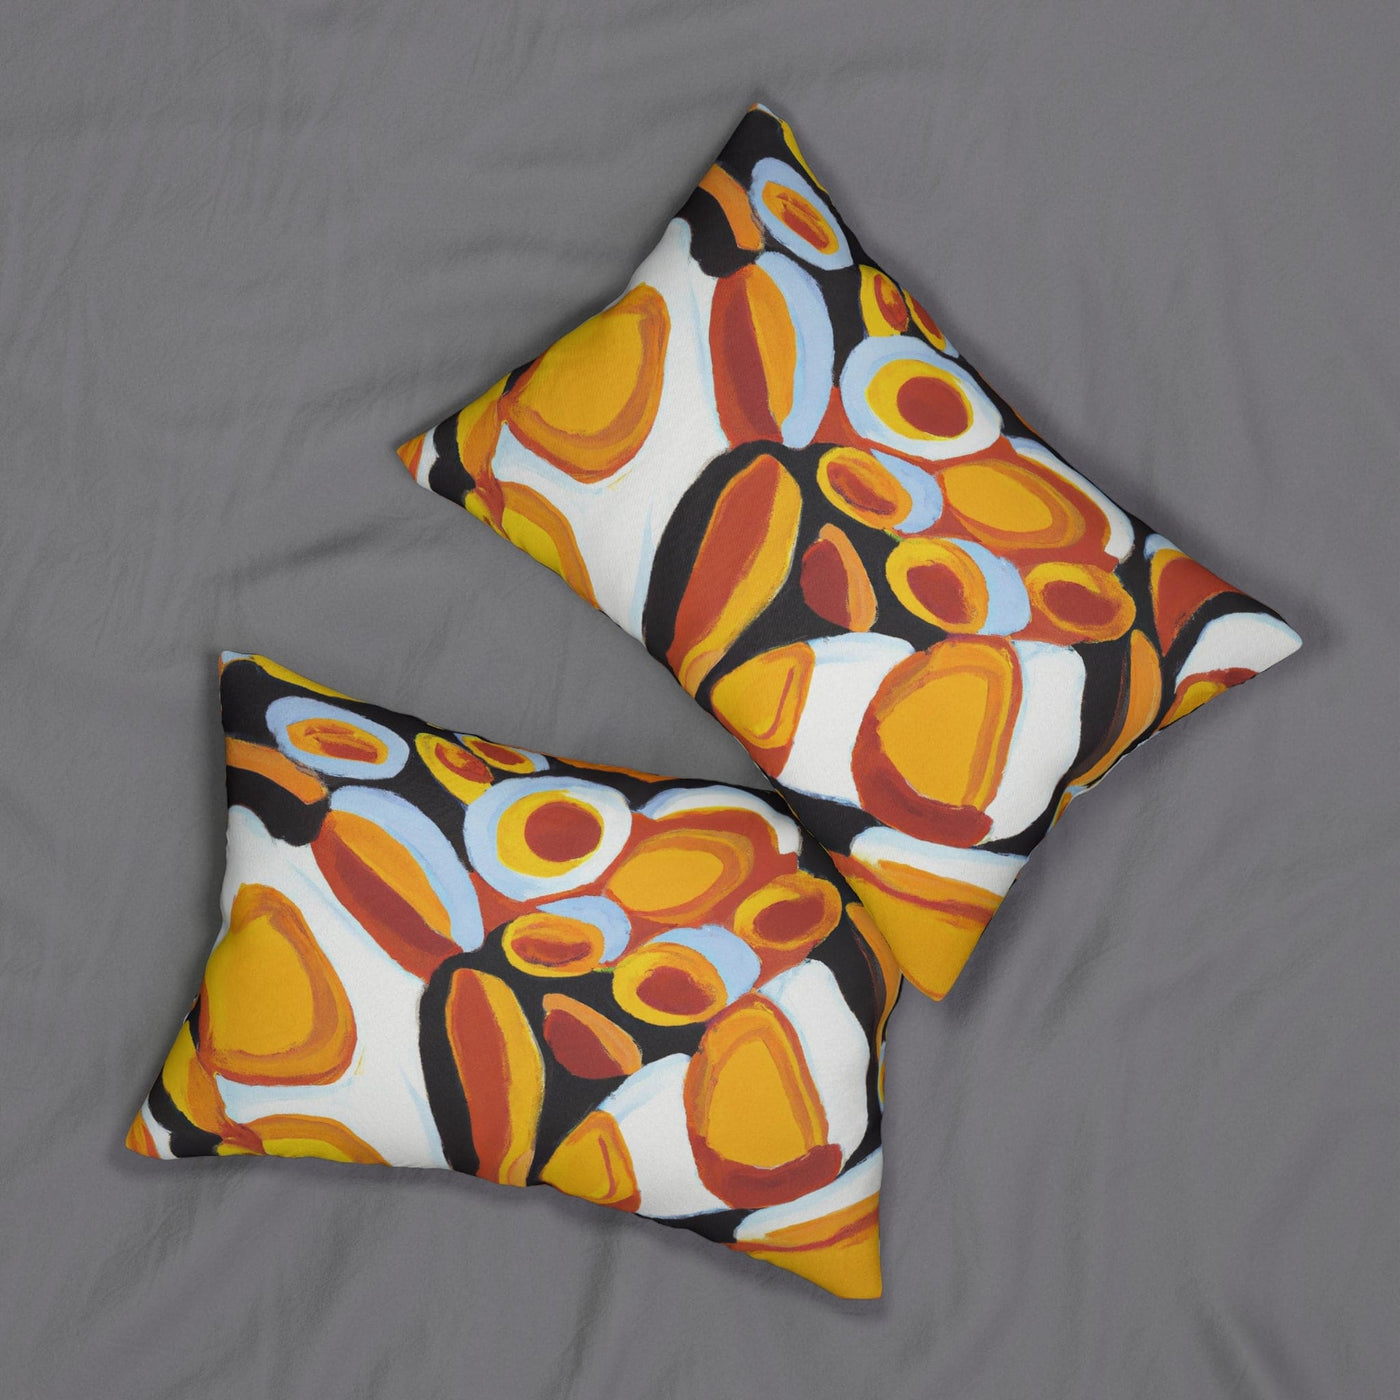 Decorative Lumbar Throw Pillow - Orange Black White Geometric Print Pattern